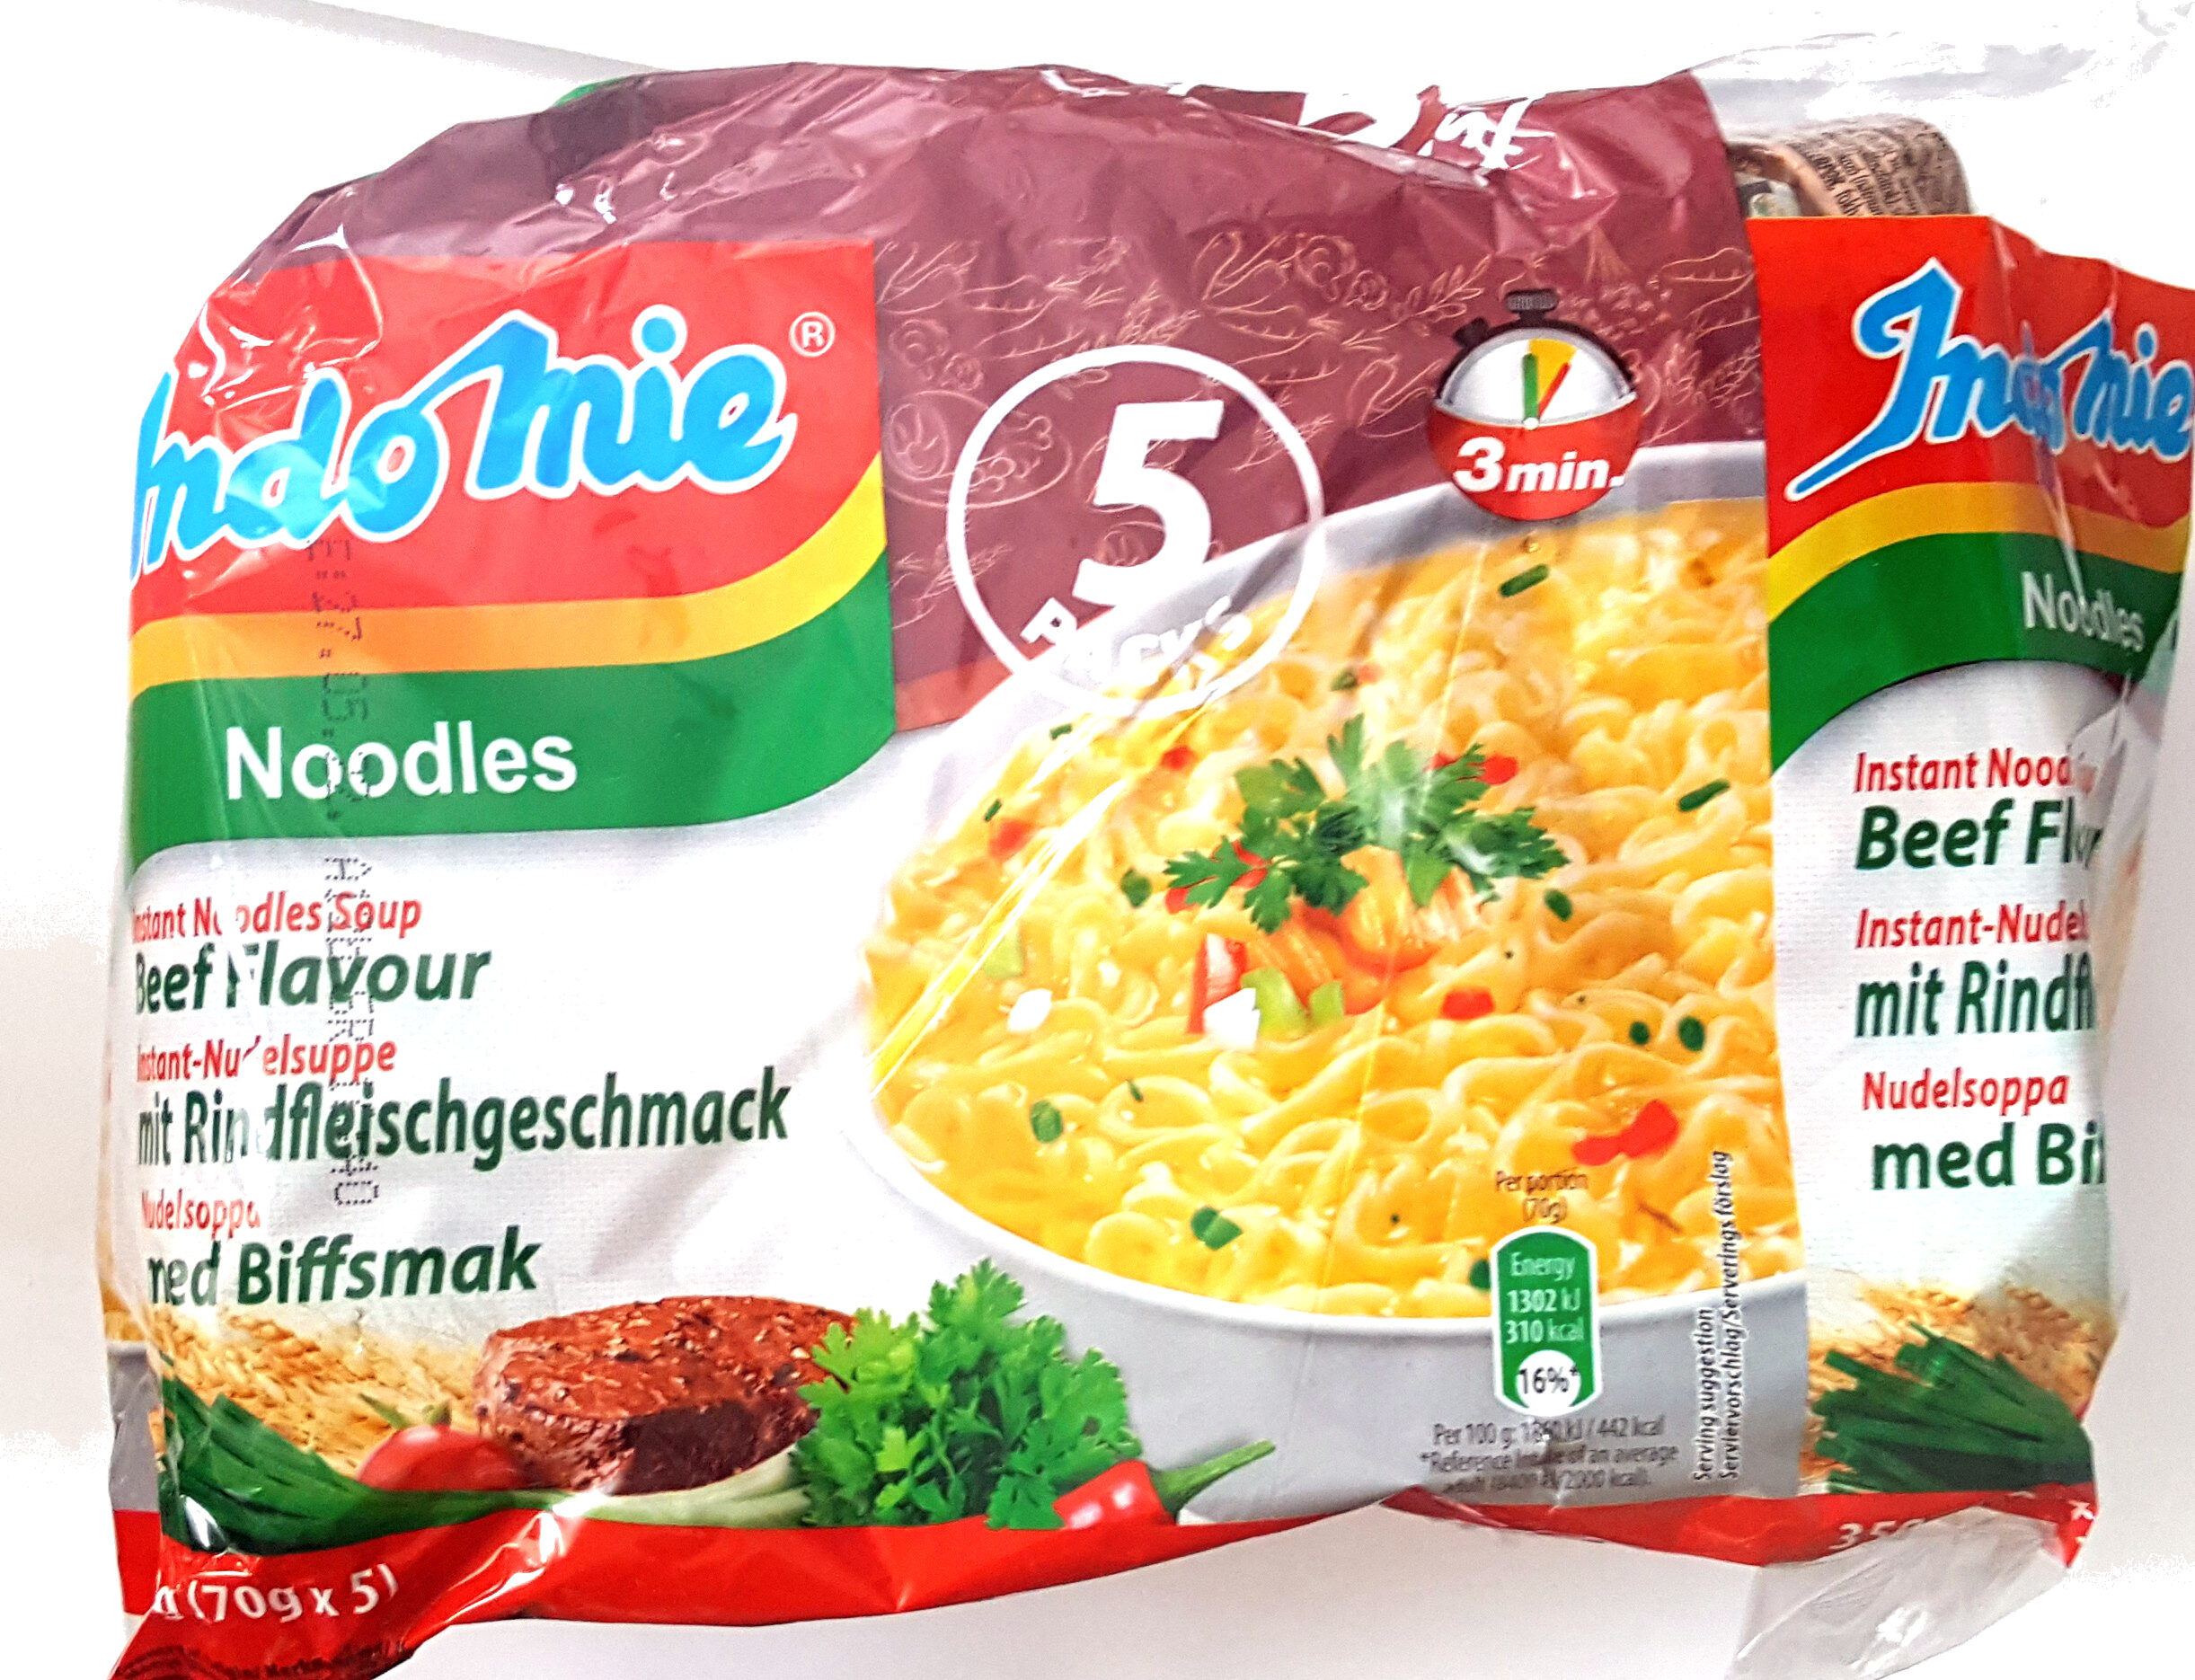 Noodles - Beef Flavor - 5 Pack - Produkt - en